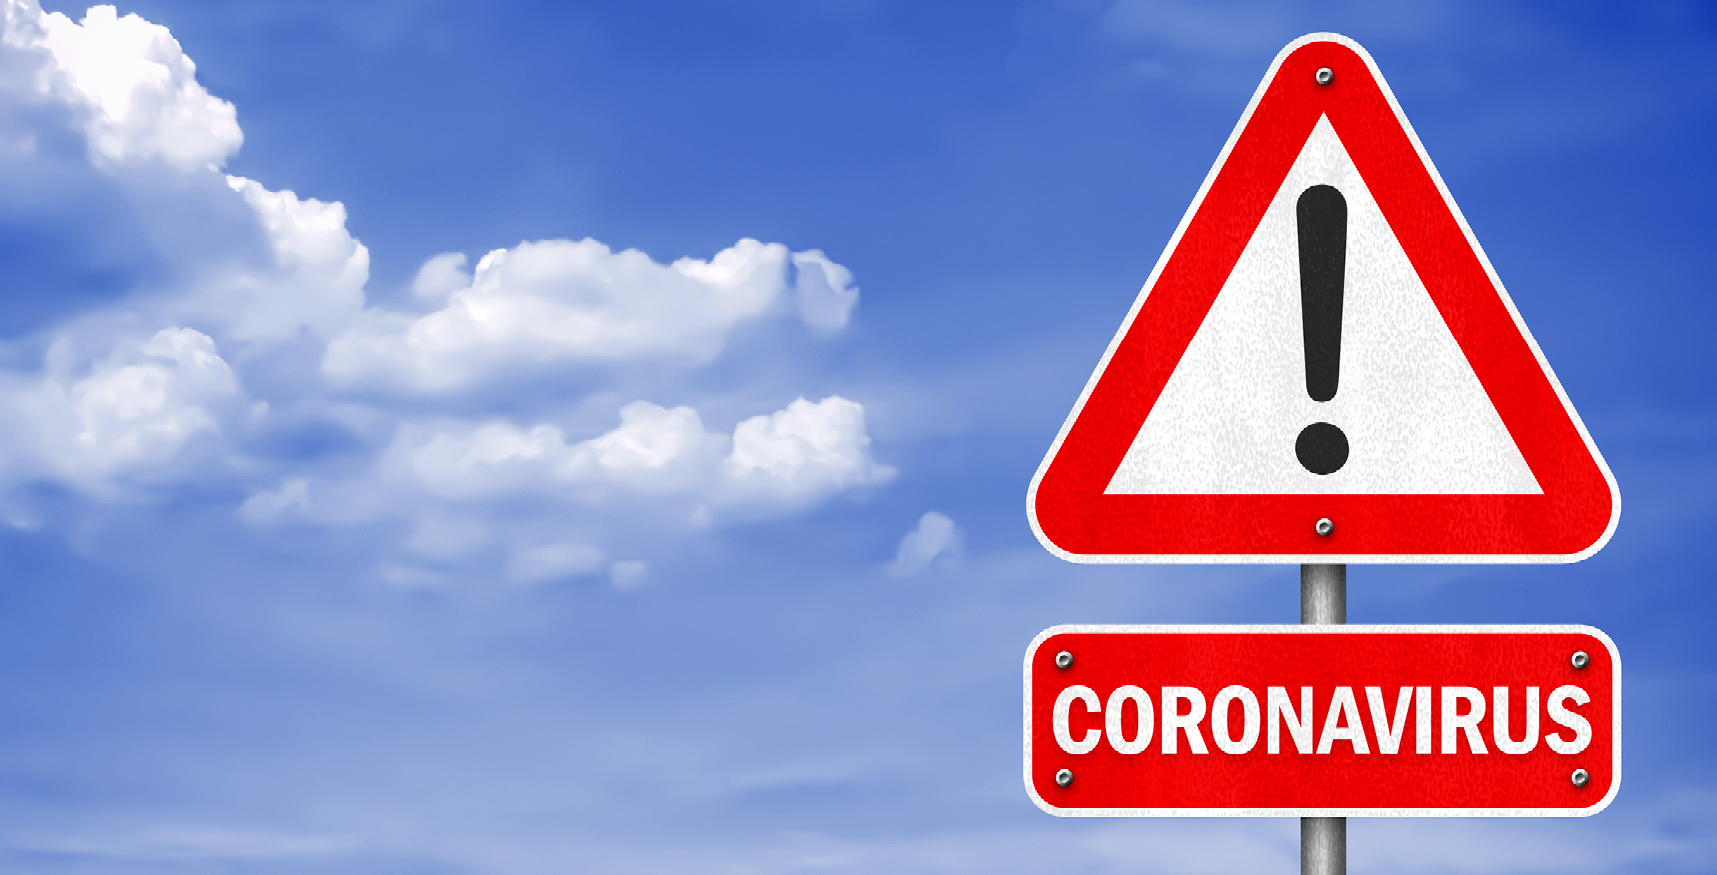 Warning sign that says "CORONAVIRUS"